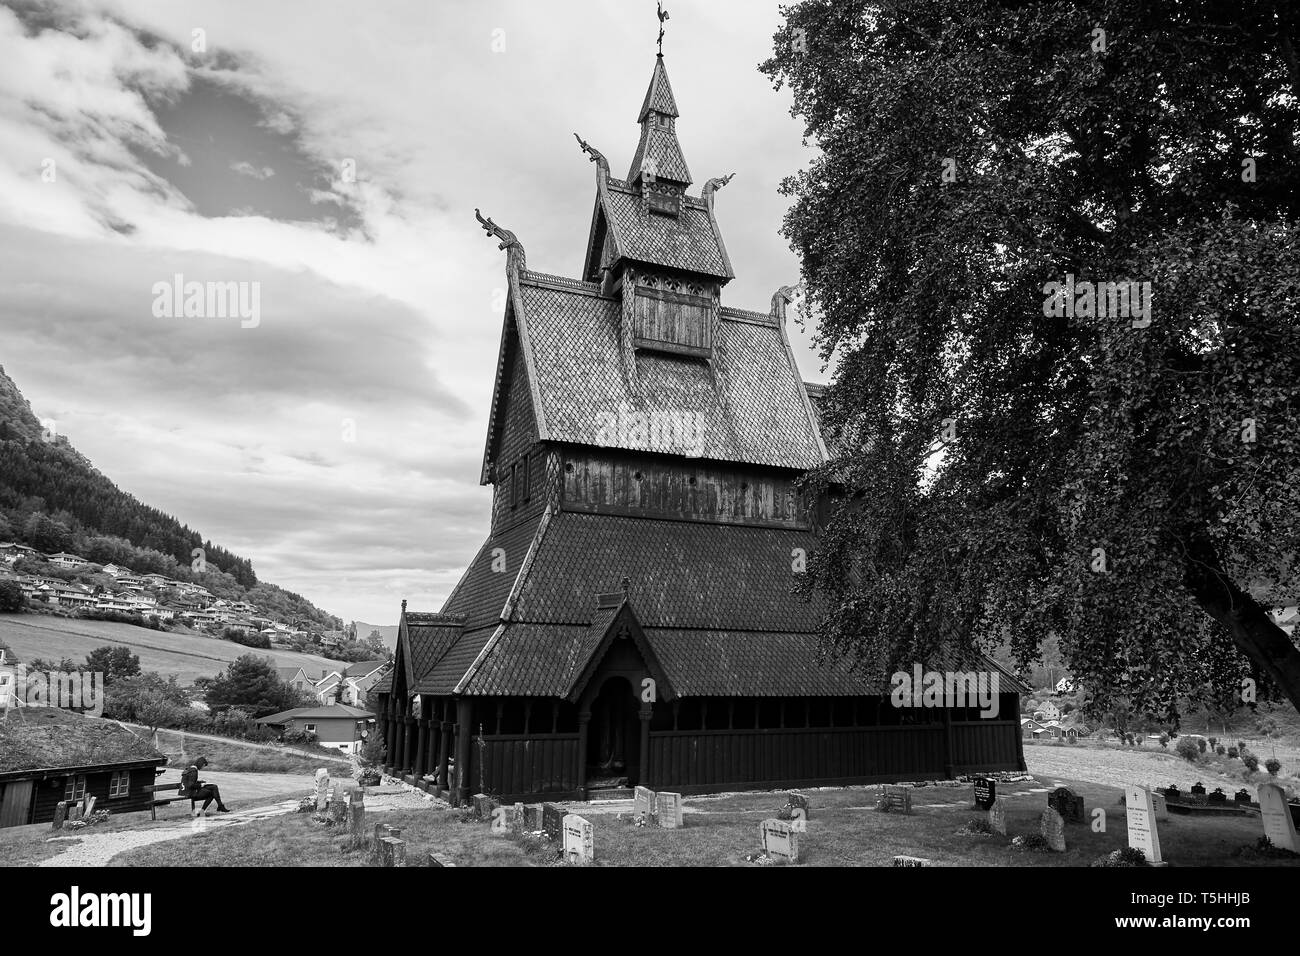 Foto in bianco e nero della storica chiesa norvegese di Hopperstad Stave del XII secolo (Hopperstad Stavkyrkje), situata a Vikøyri, Sogn og Fjordane. Foto Stock